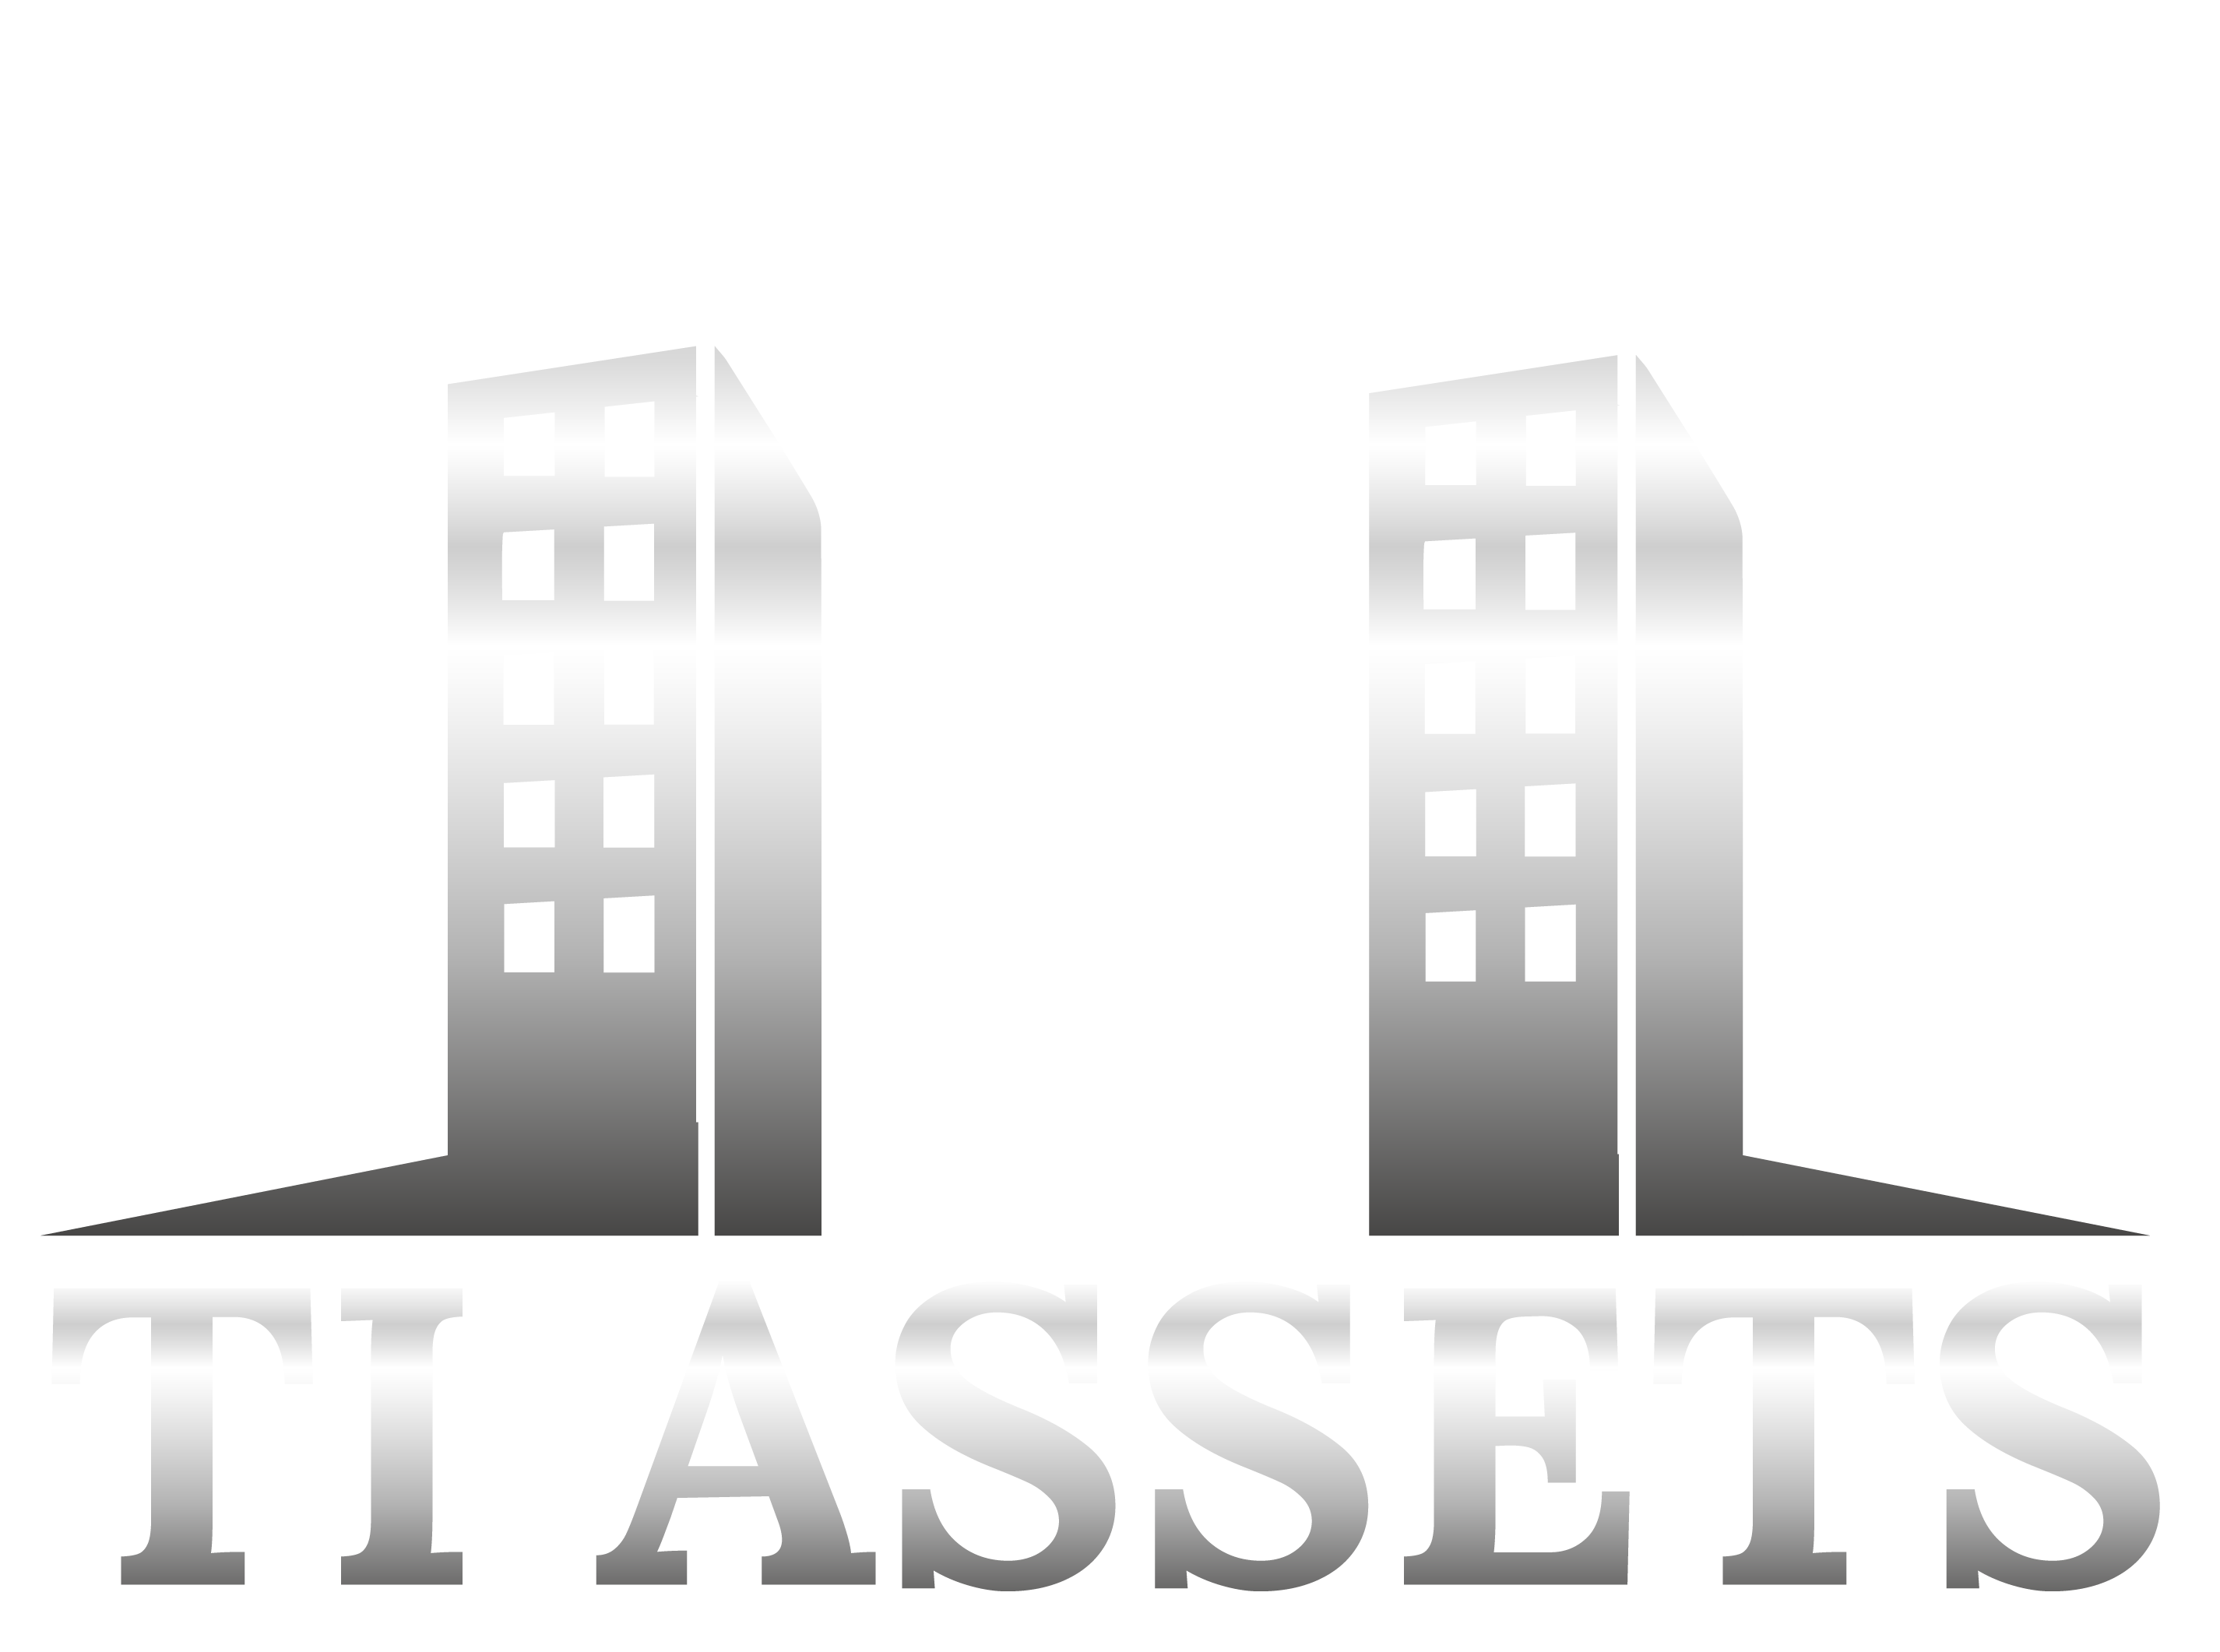 TI Assets